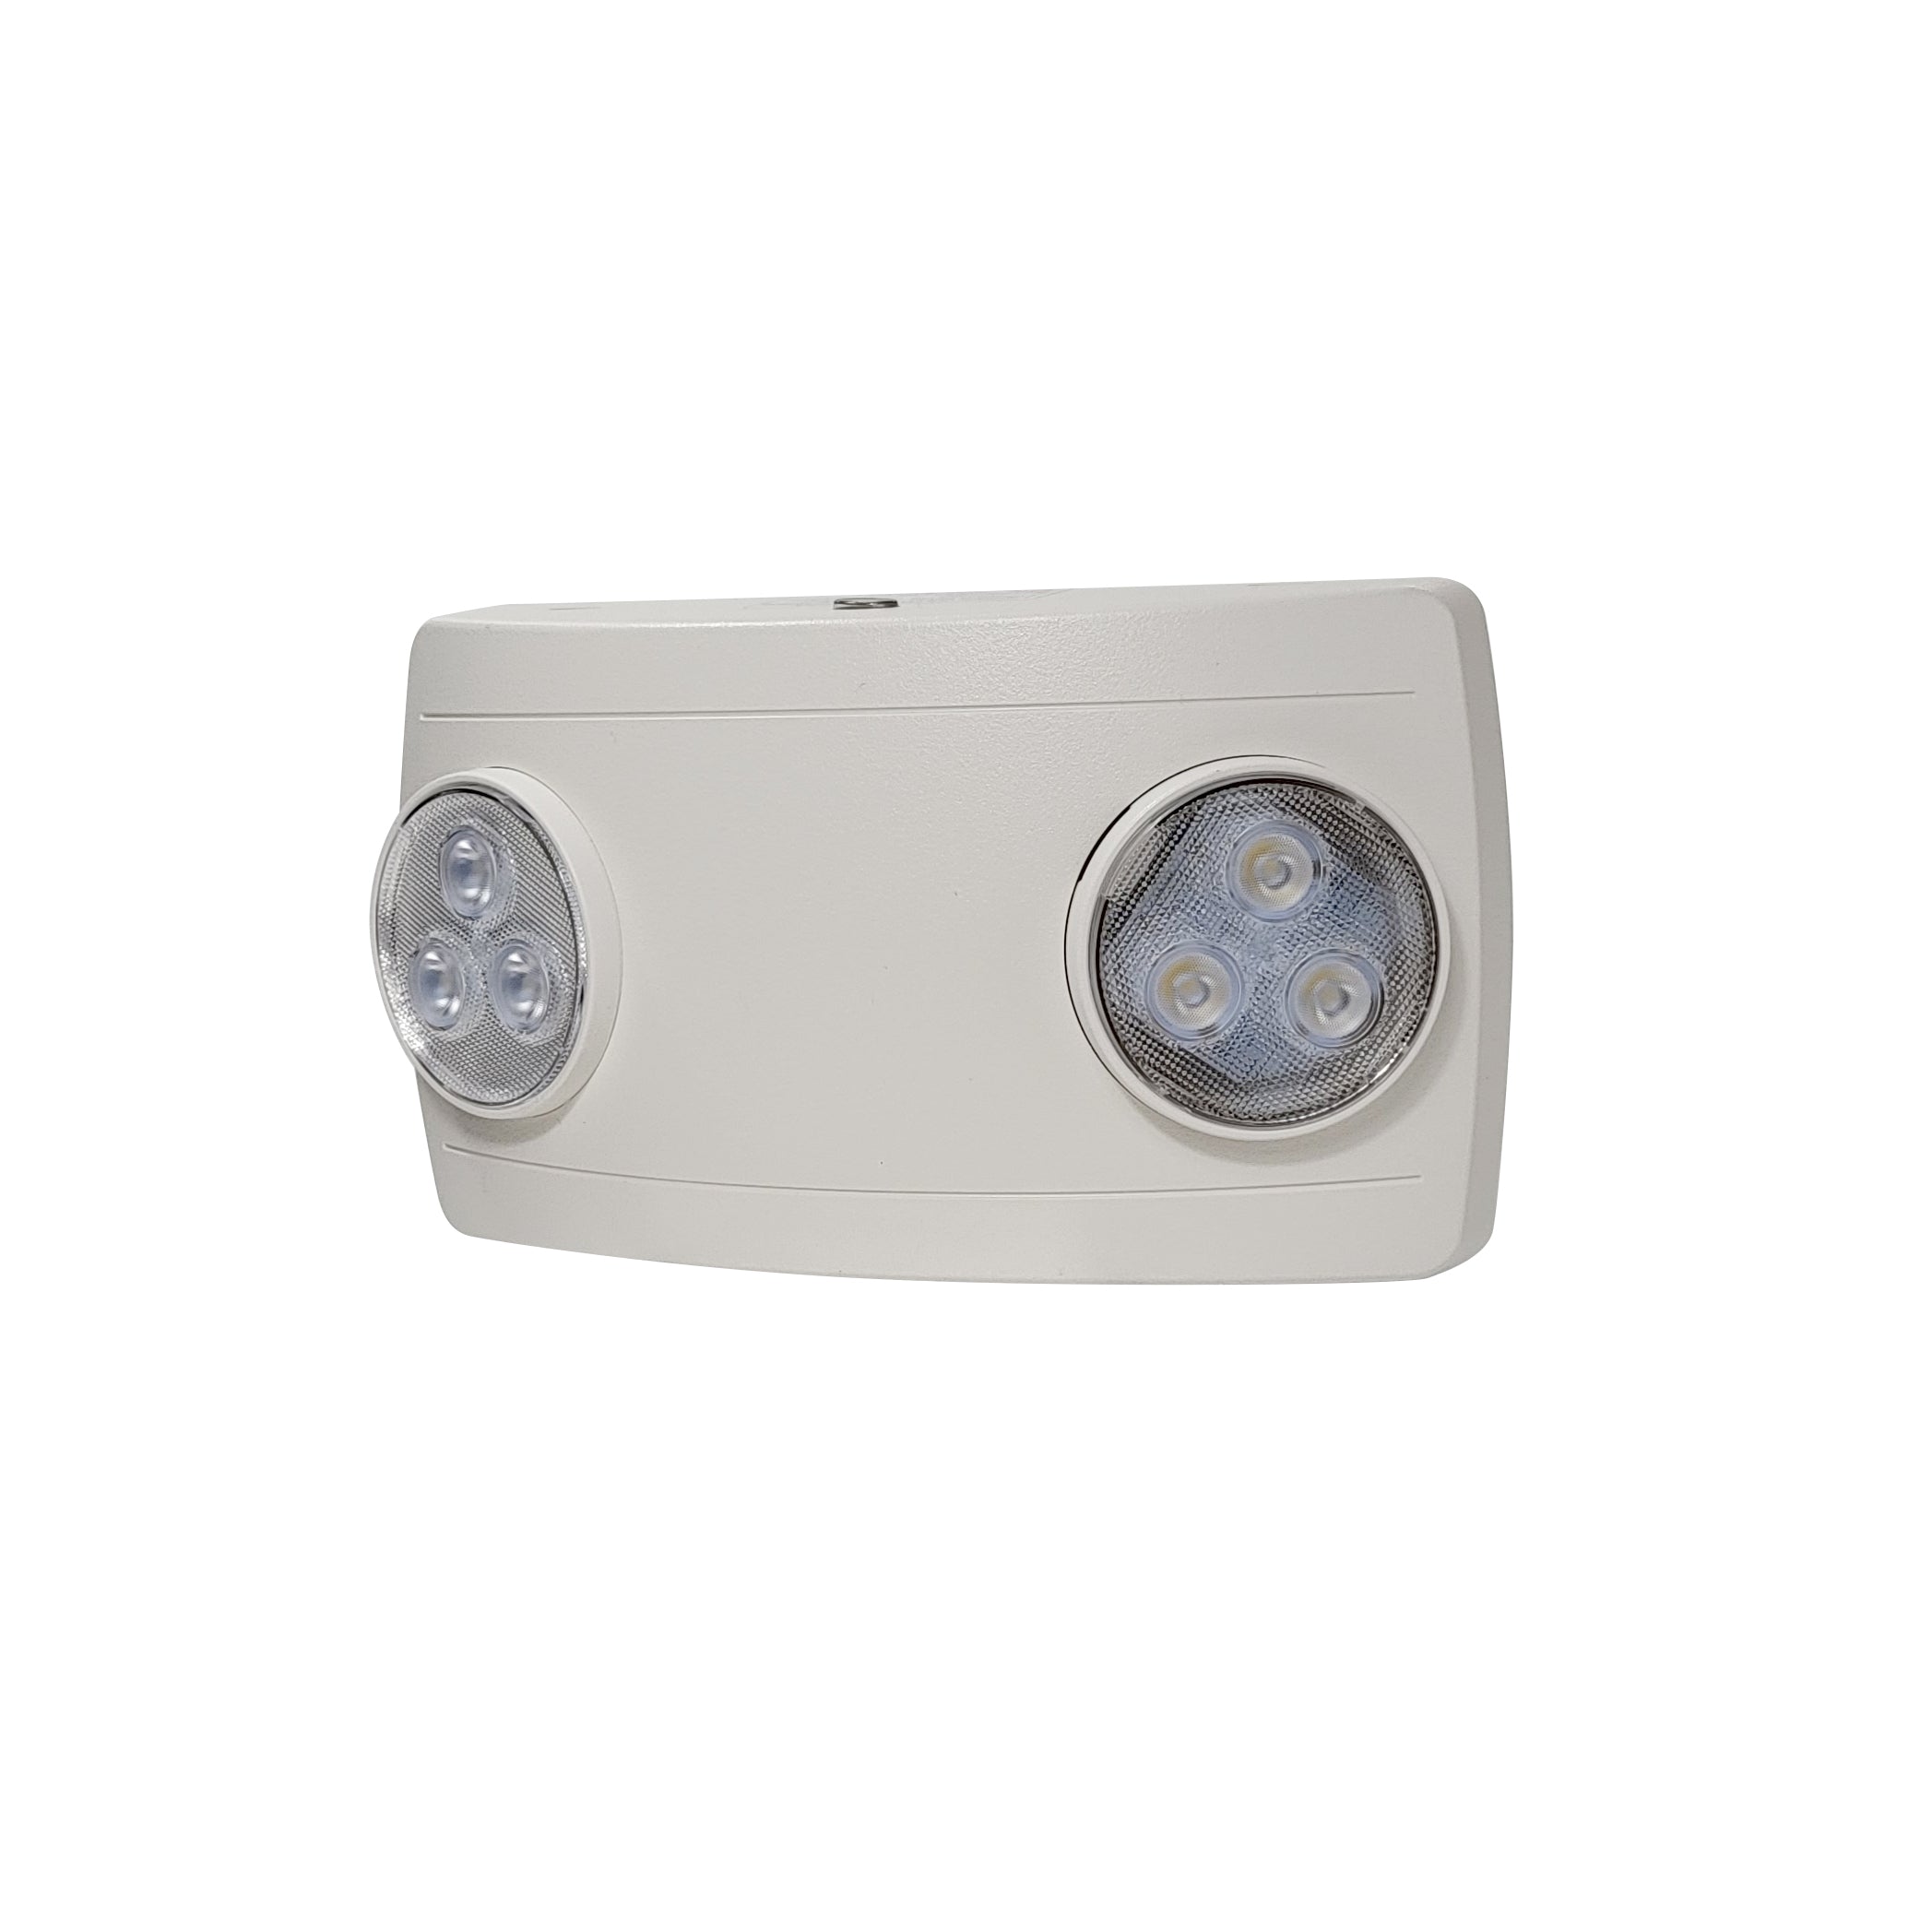 Nora Lighting NE-612LEDRCW Compact Dual Head LED Emergency Light With 4W Remote Capability, Self-Diagnostic, 120/277V - White